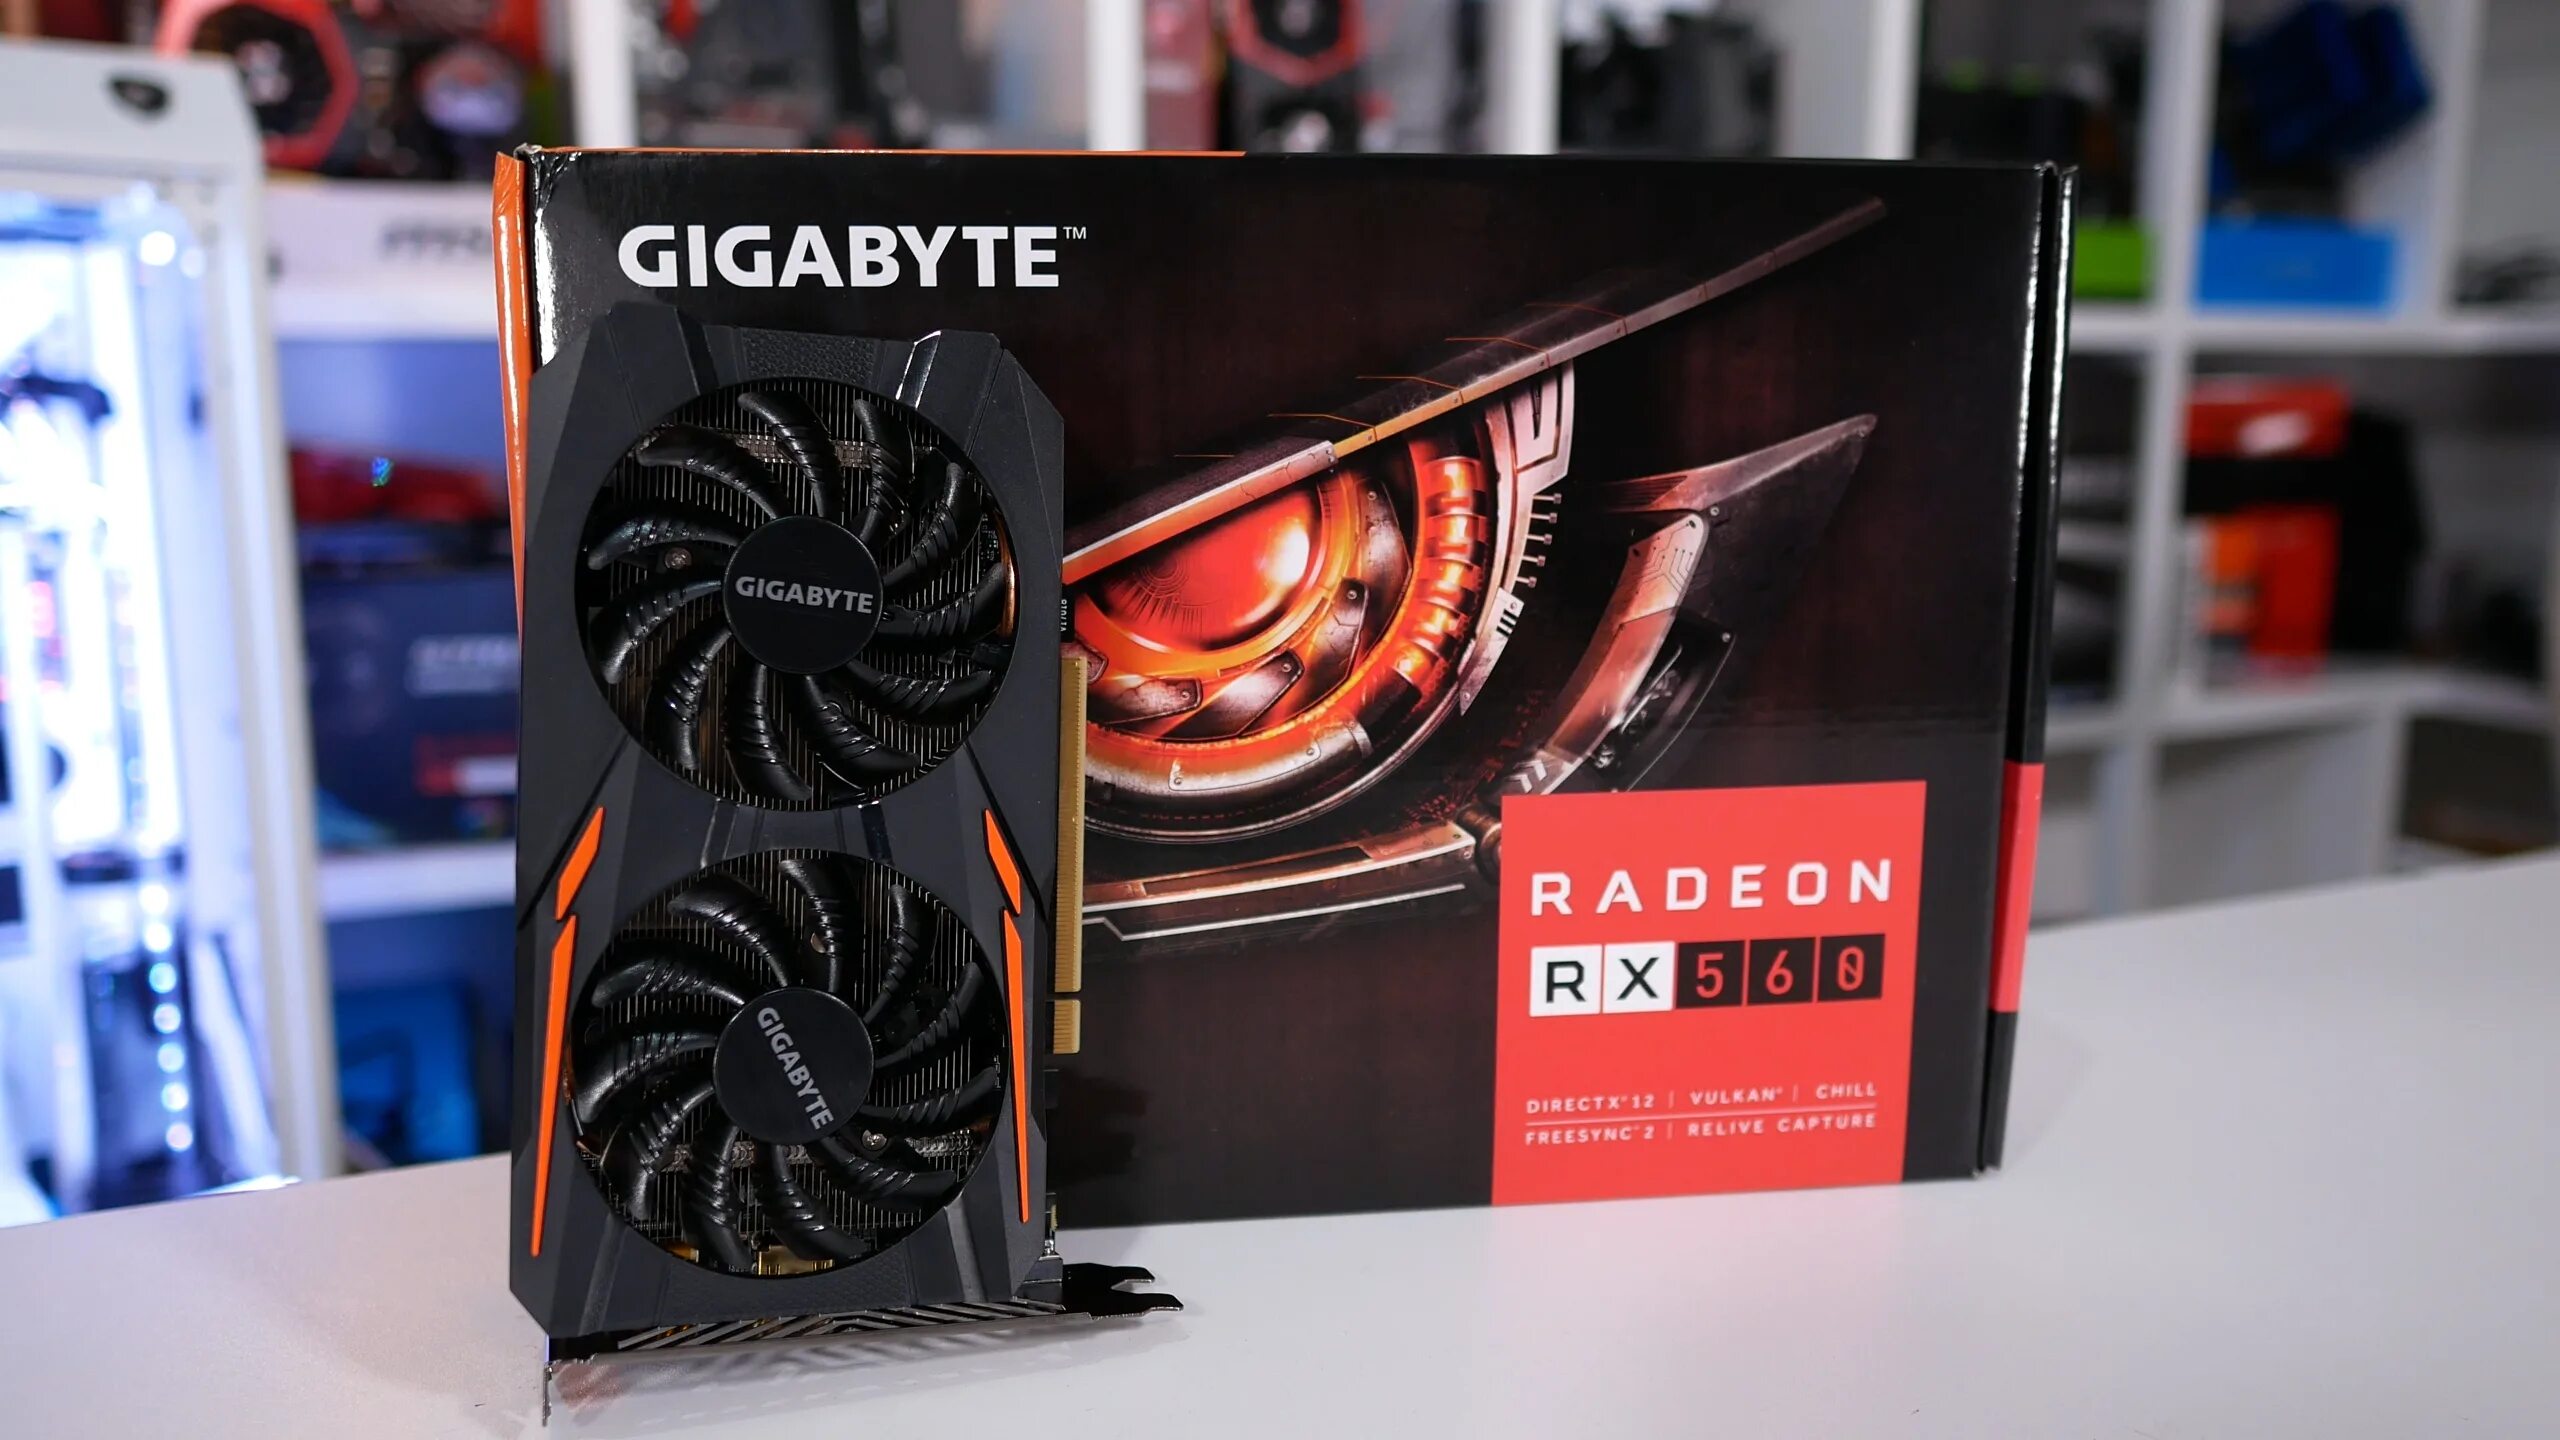 Radeon rx 560 gaming. RX 560 Series 4gb. AMD Radeon RX 560 4gb. Sapphire RX 560 4gb. RX 560 4g Gigabyte.